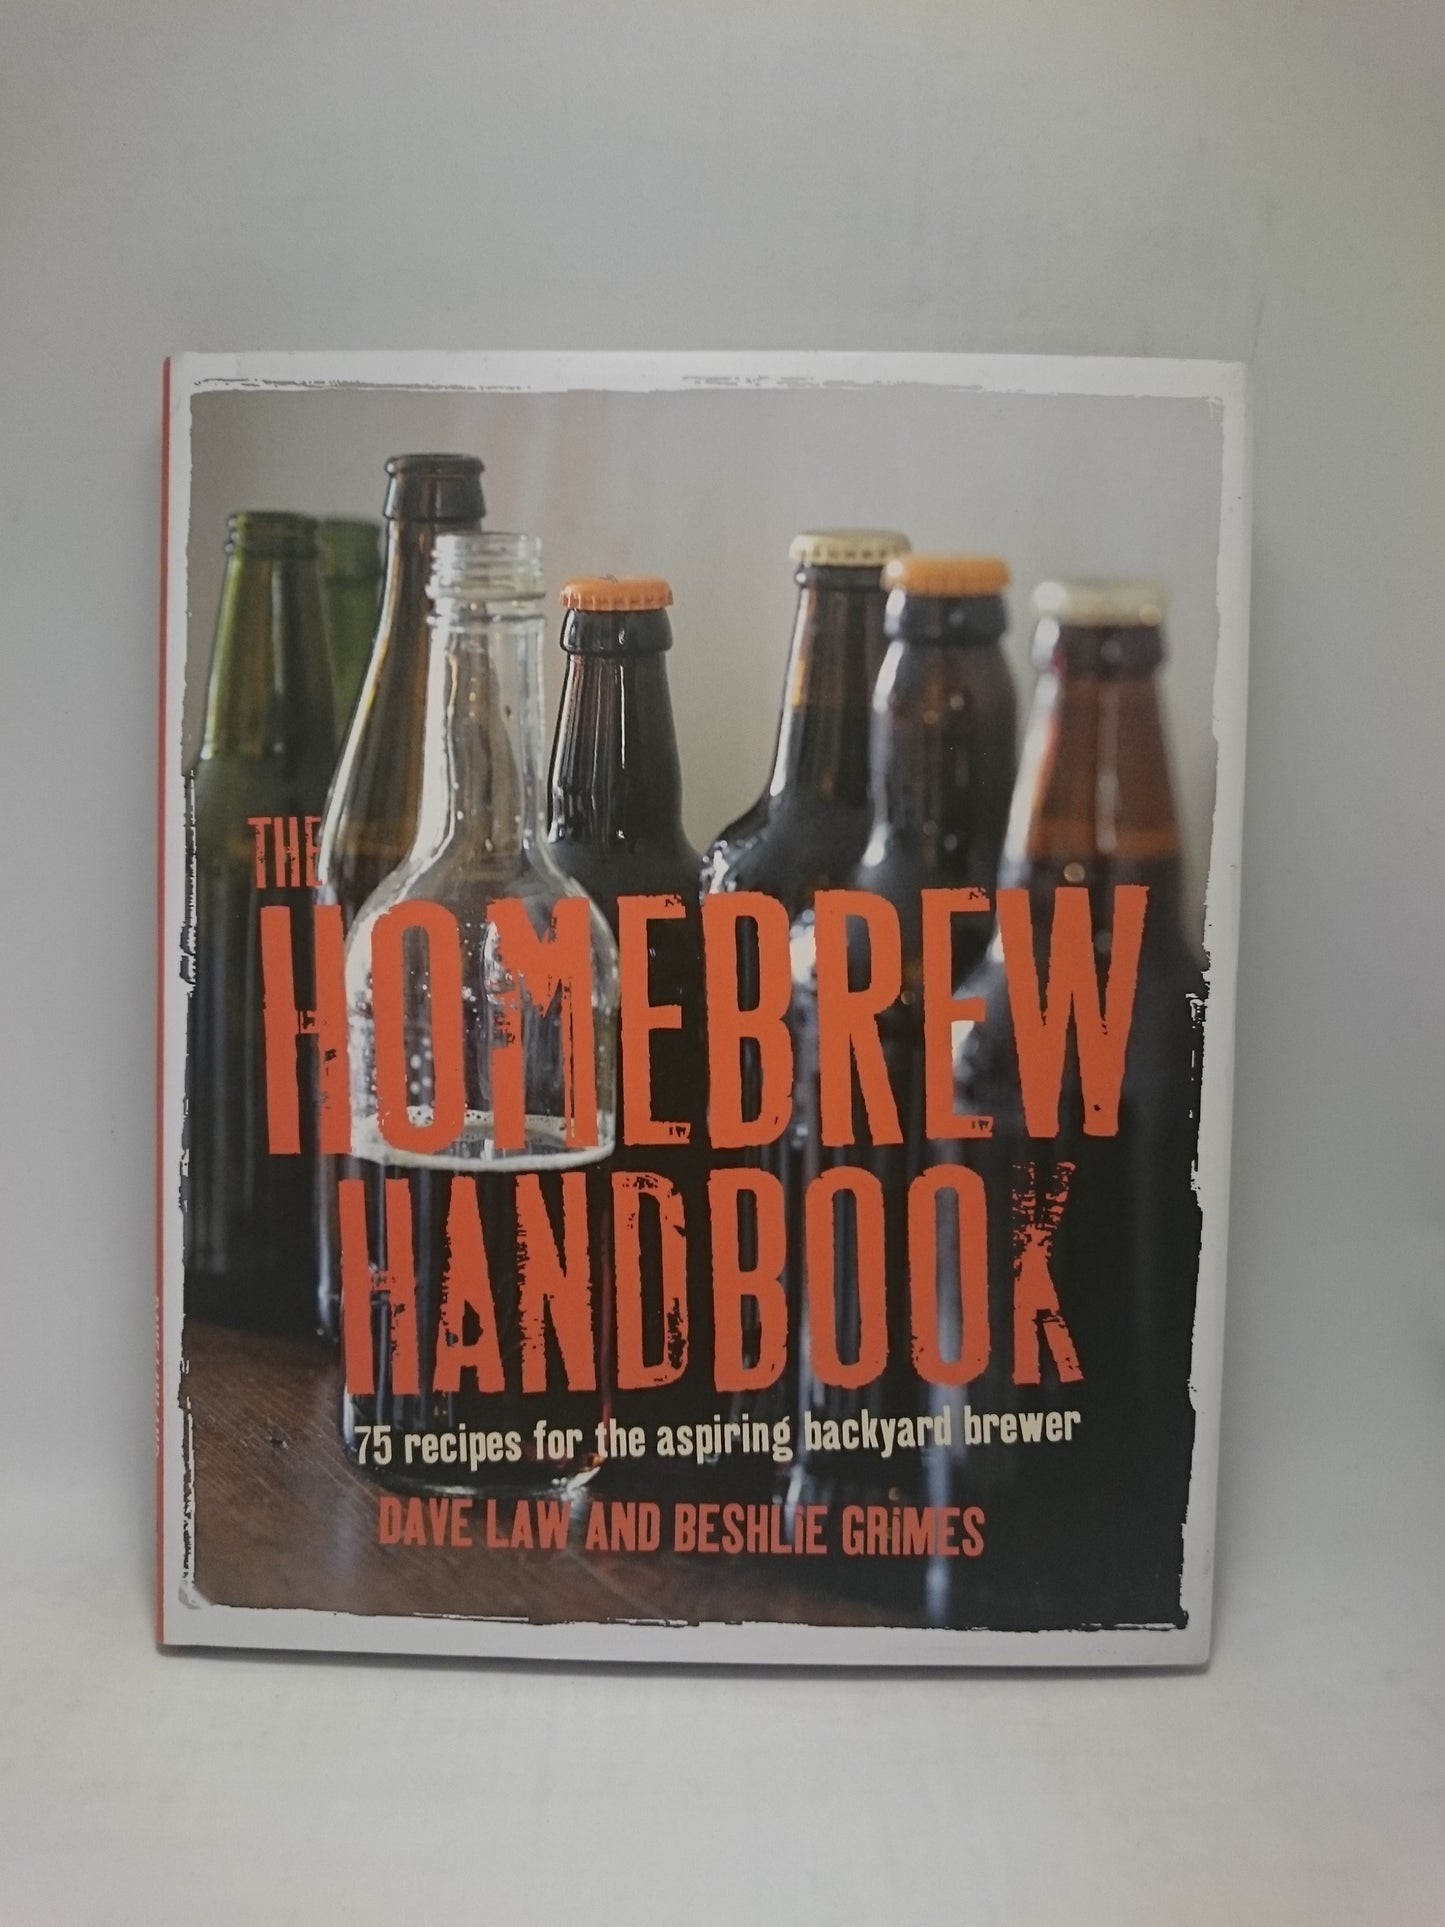 The Homebrew Handbook: 75 recipes for the aspiring backyard brewer